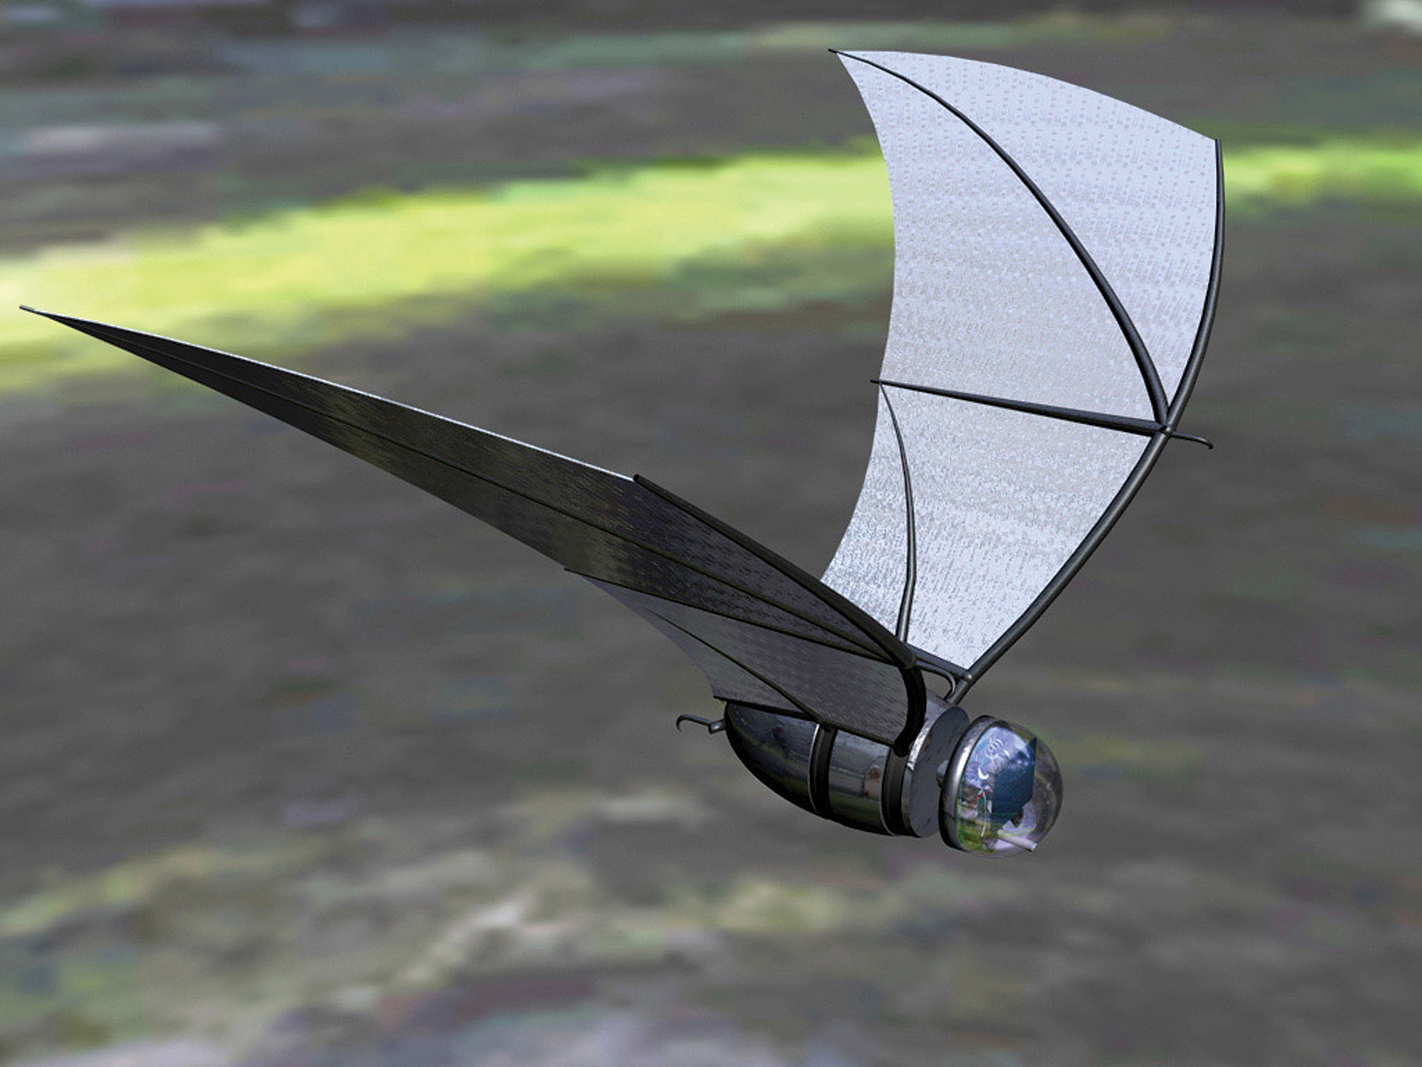 Bat-inspired drone